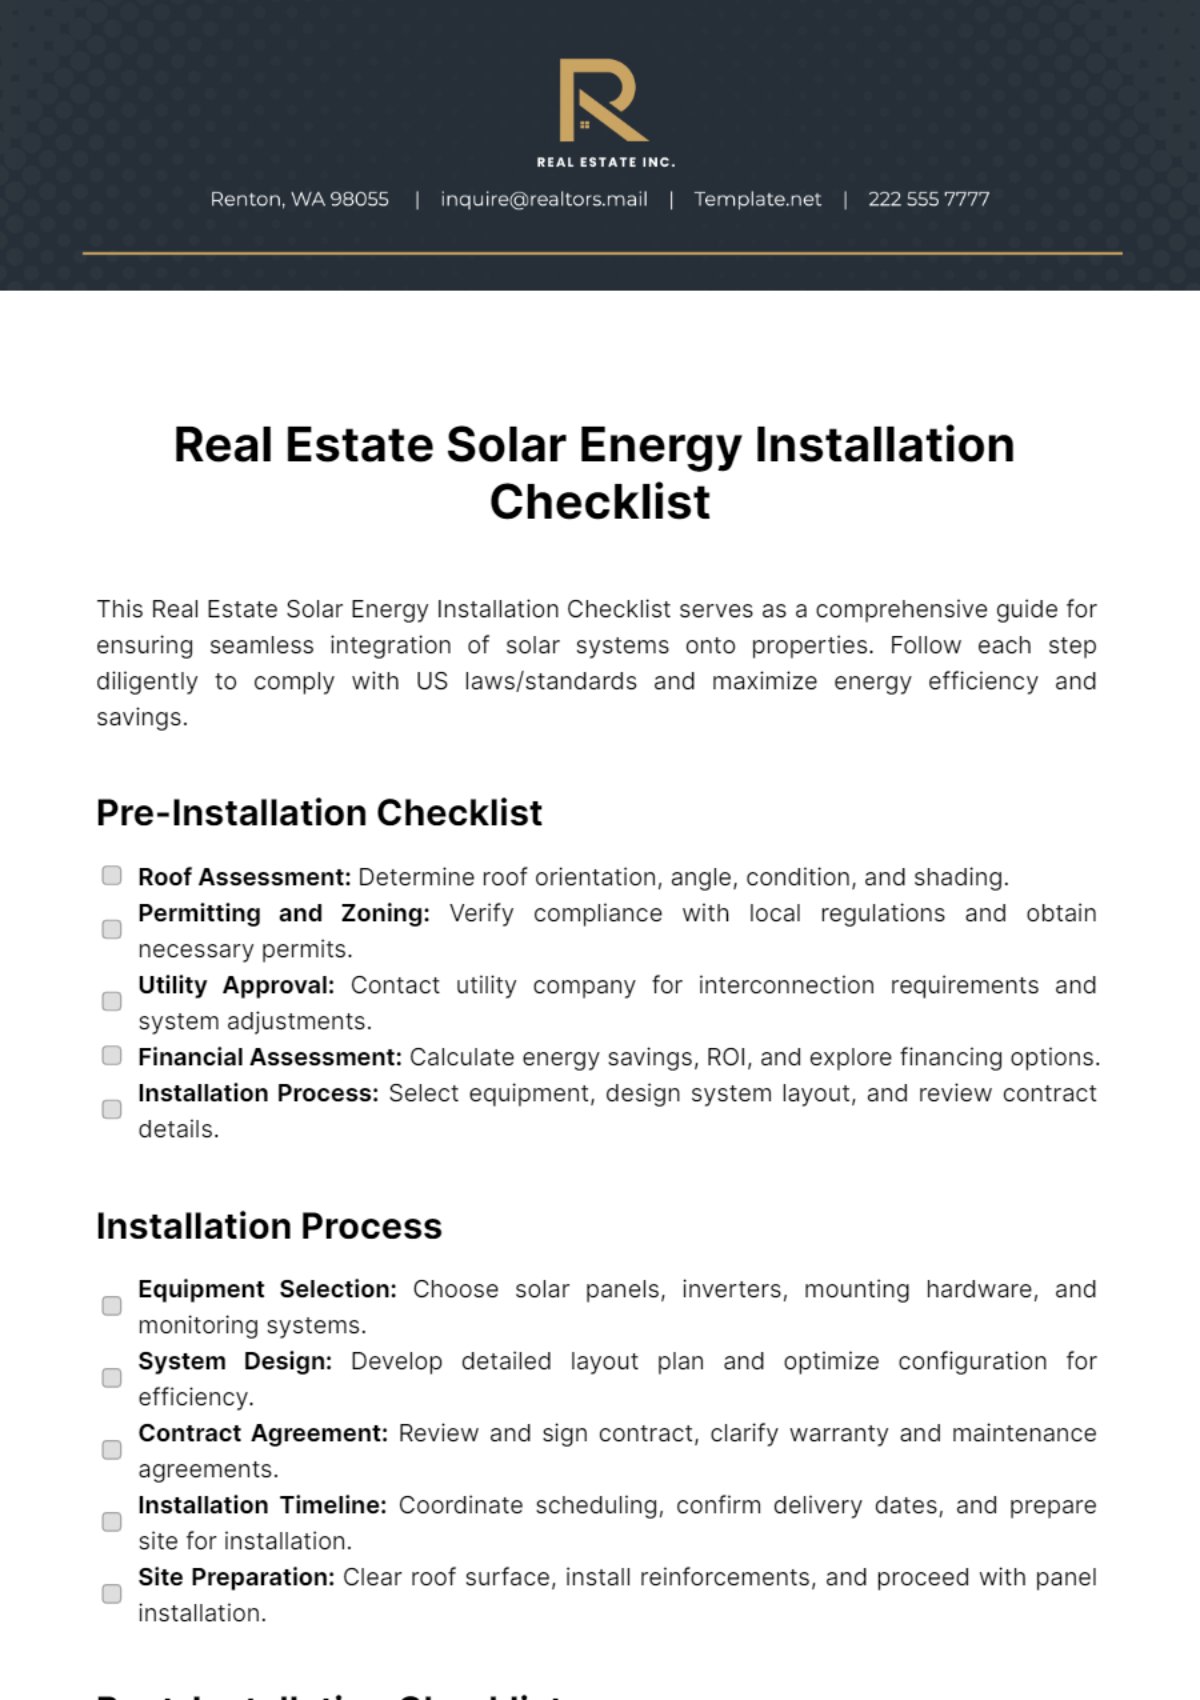 Real Estate Solar Energy Installation Checklist Template